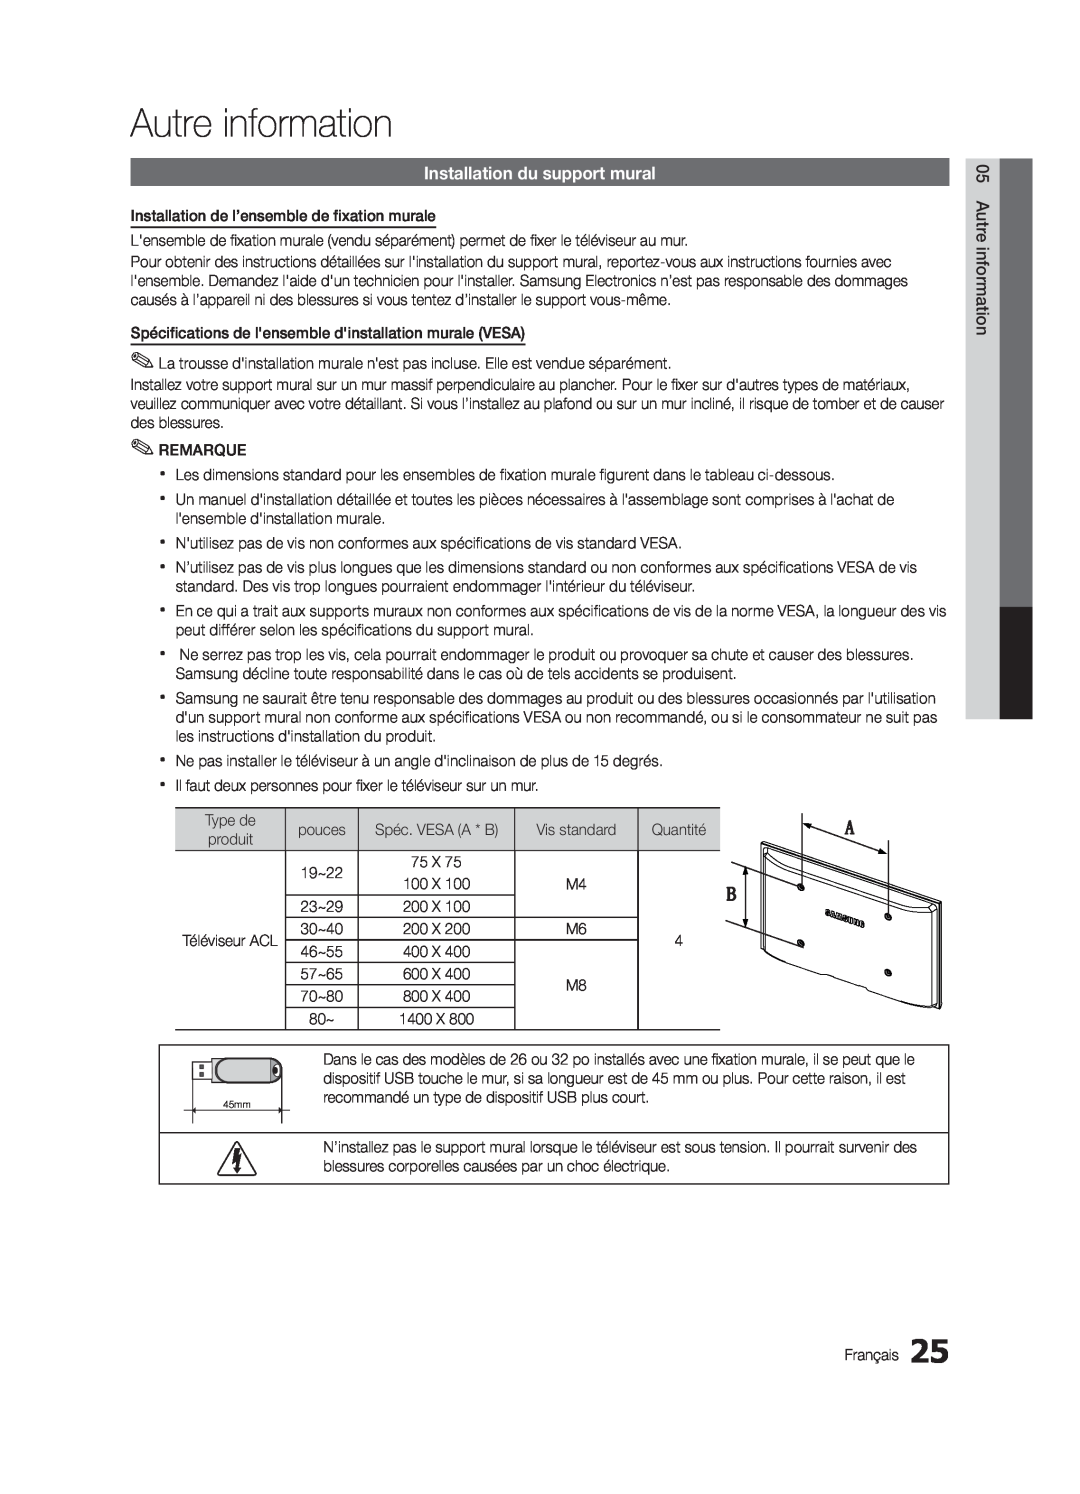 Samsung BN68-02620B-06 user manual Autre information, Installation du support mural 